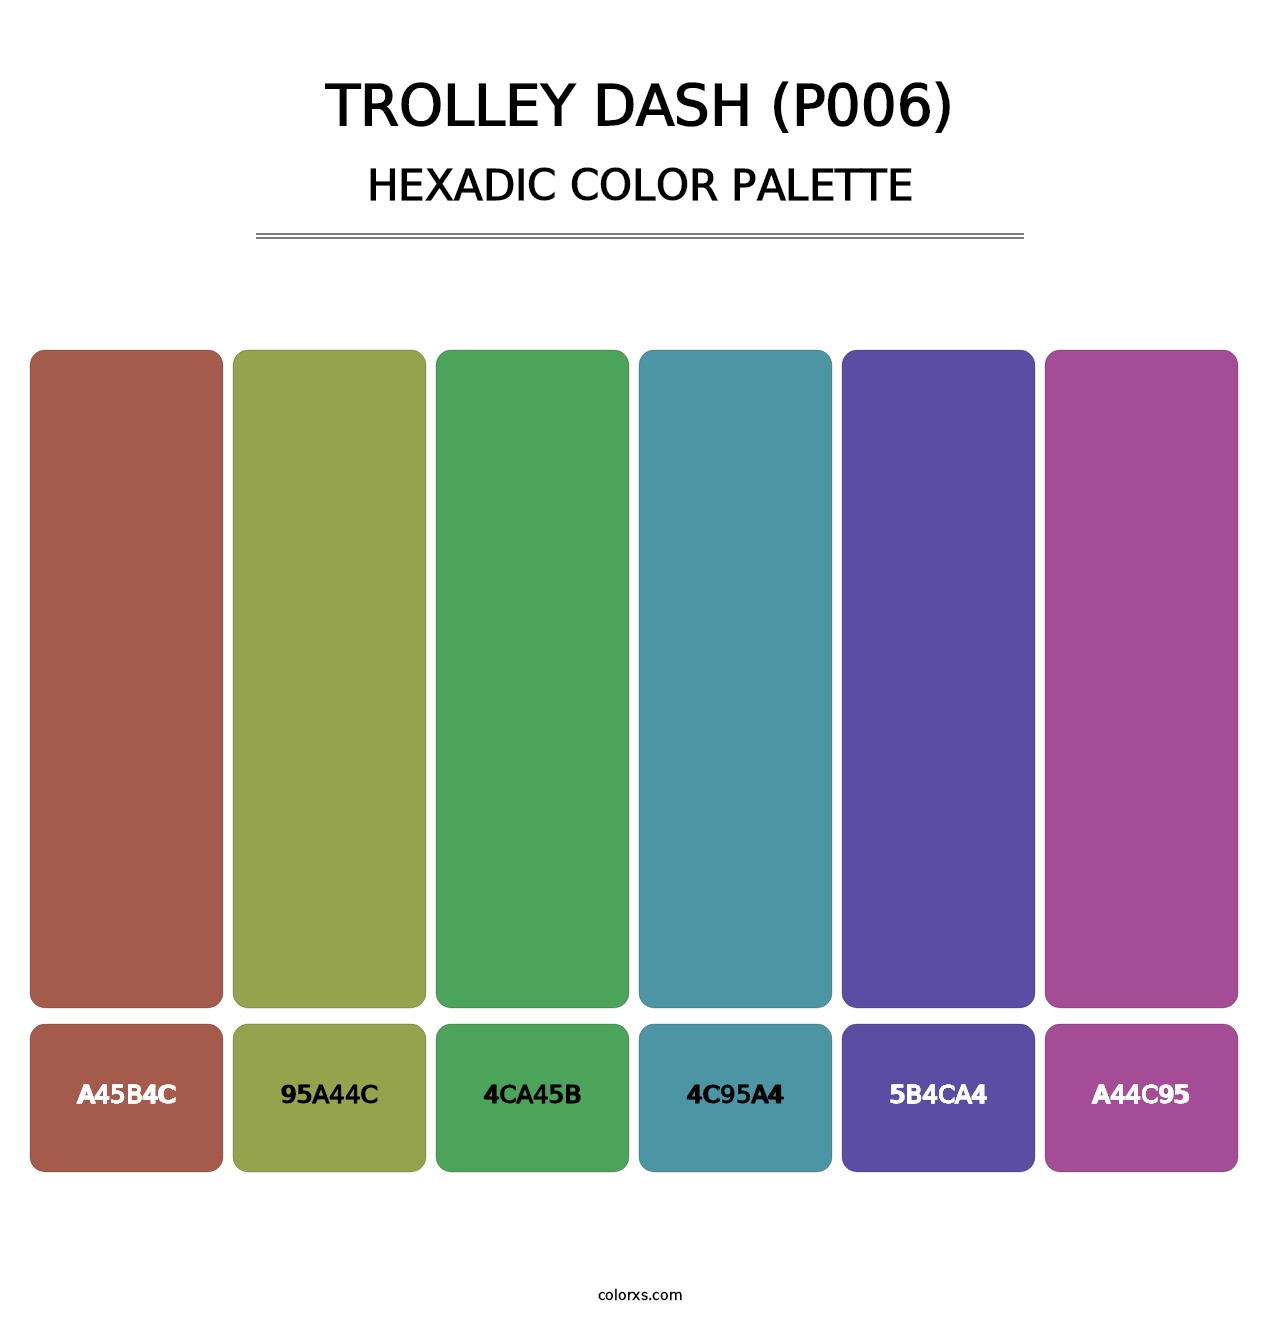 Trolley Dash (P006) - Hexadic Color Palette